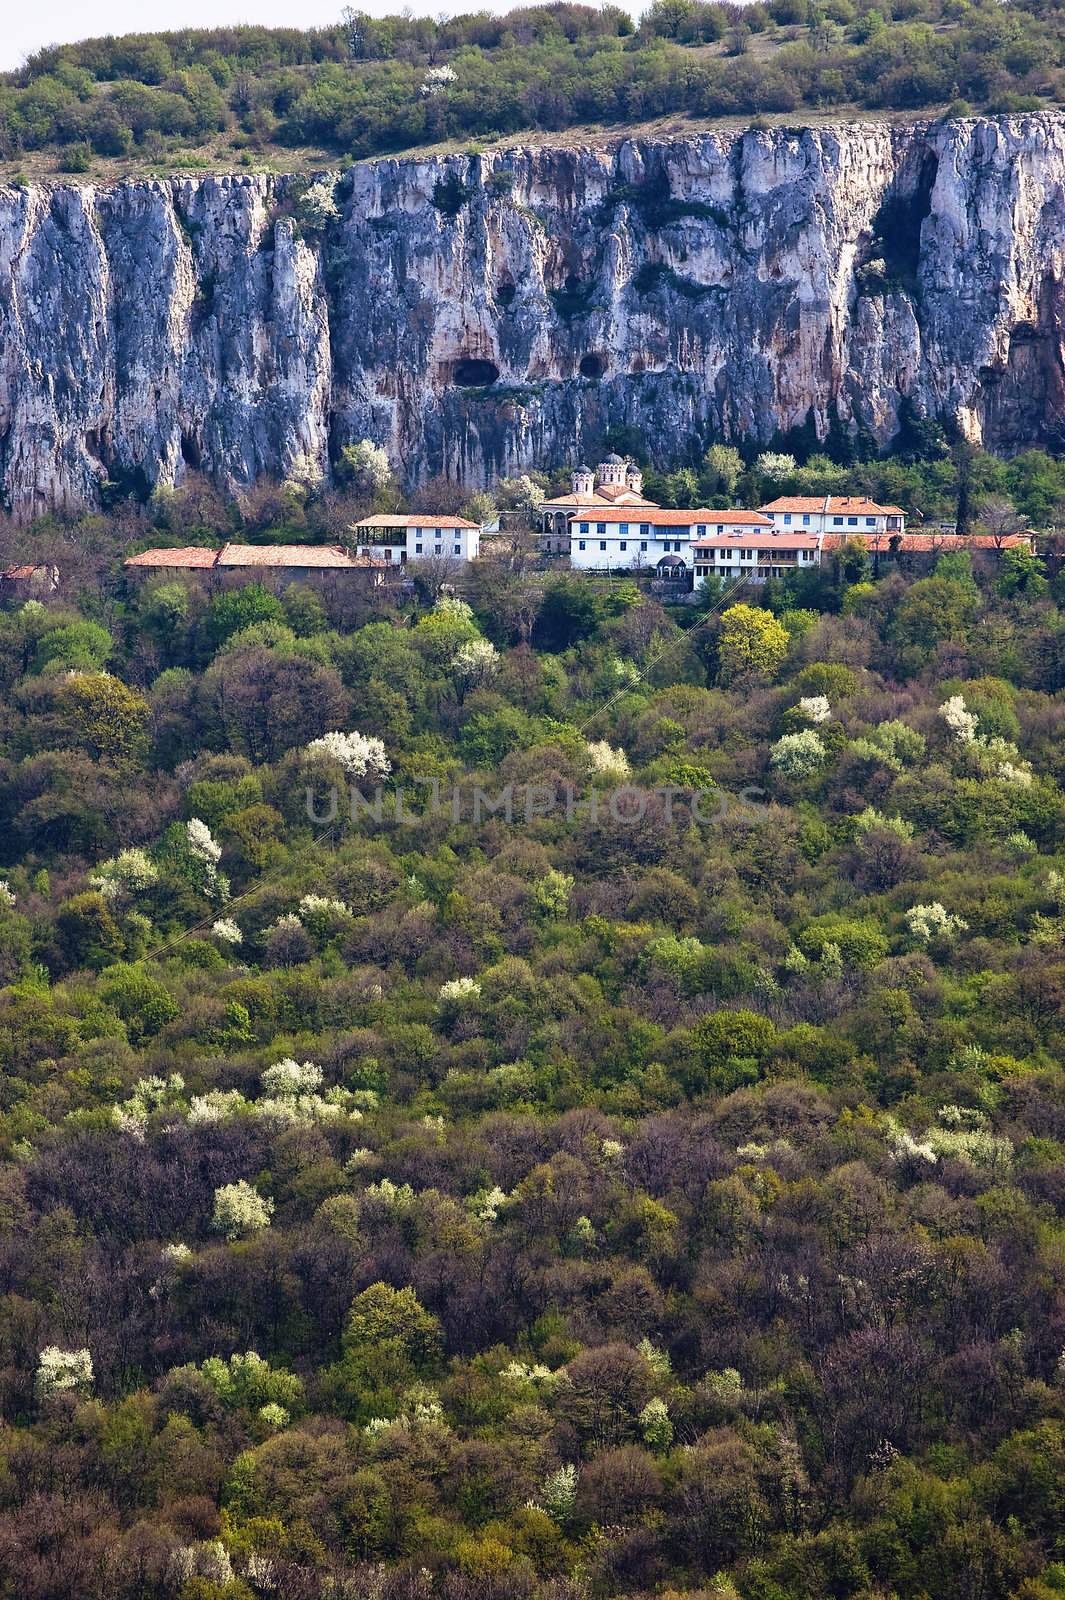 Patriarch monastery Sveta Troitsa near Veliko Turnovo Bulgaria - built in 10th century